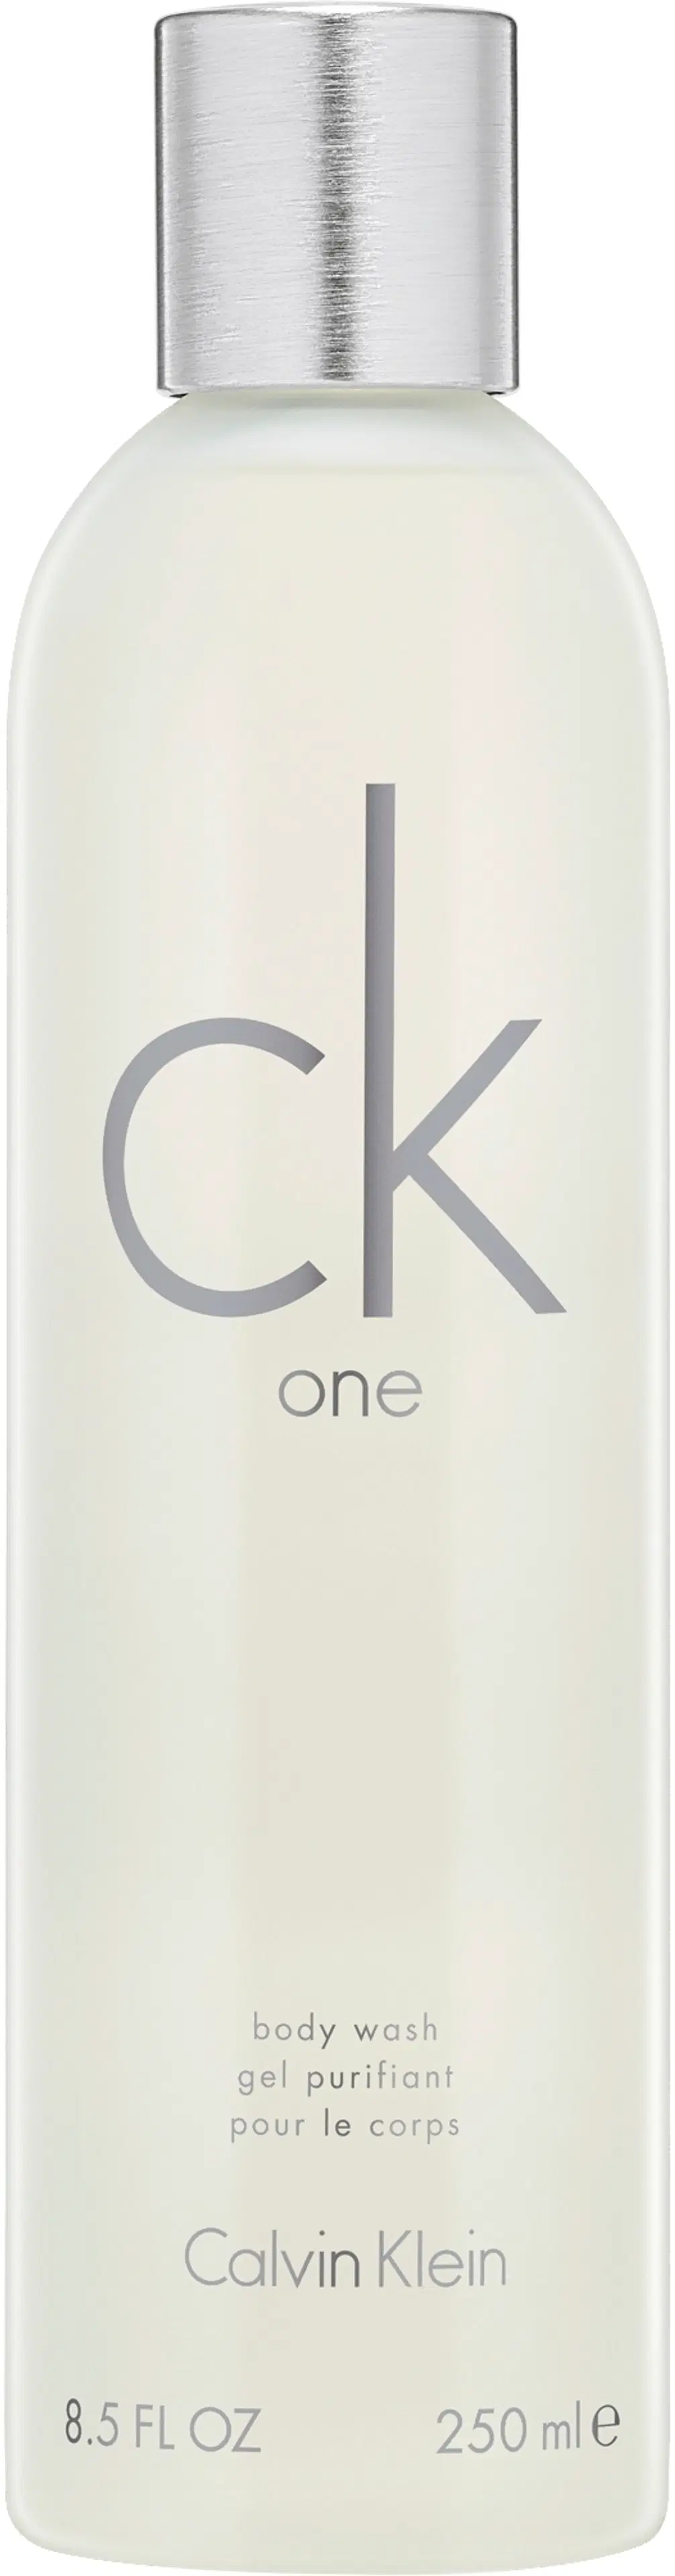 Calvin Klein cK One suihkugeeli 250 ml